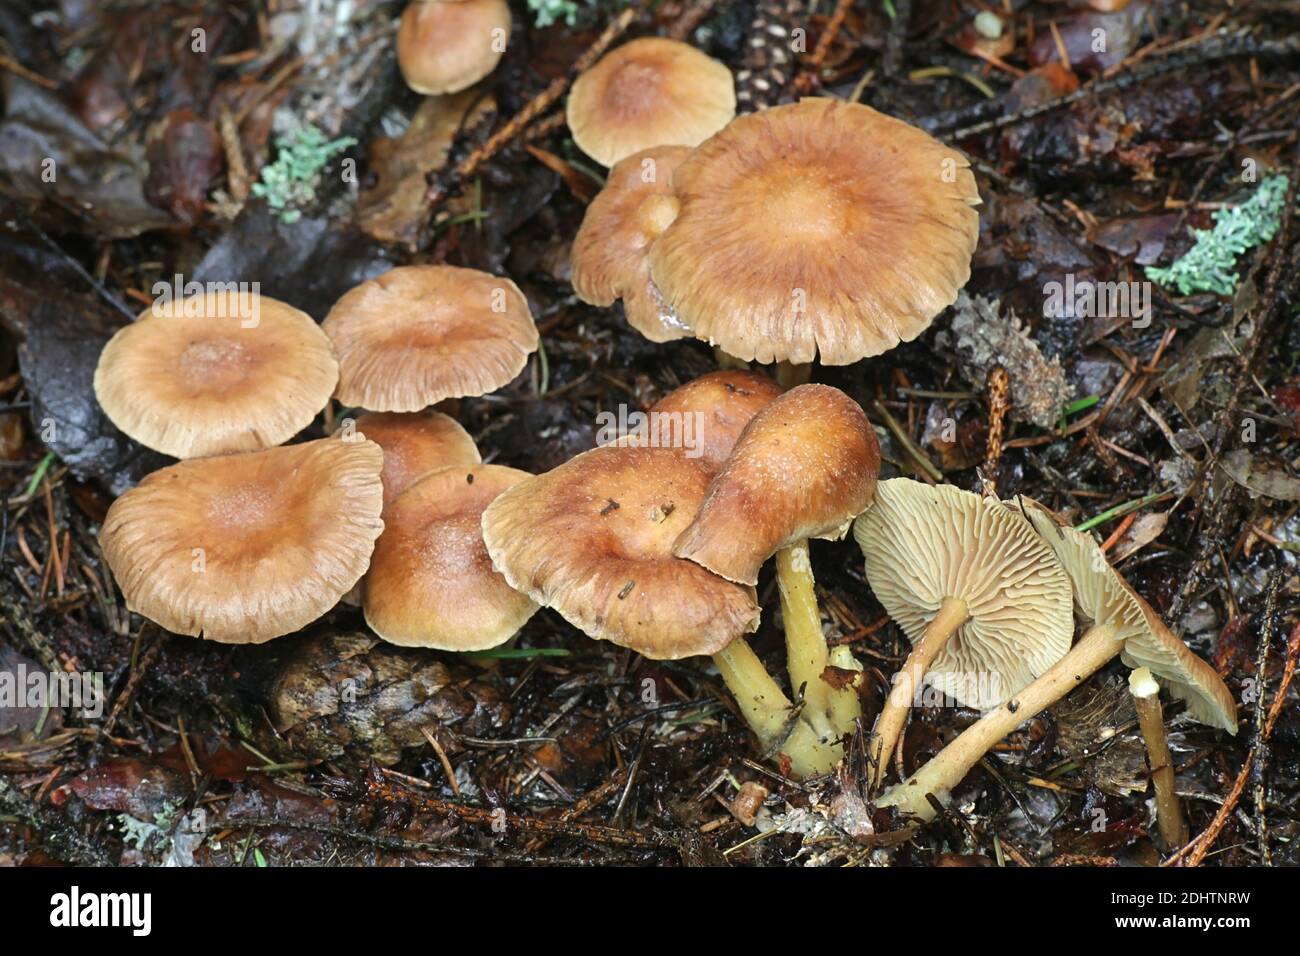 Gymnopus peronatus (formerly called Collybia peronata or Marasmius urens), known as wood woolly-foot, wild mushroom from Finland Stock Photo